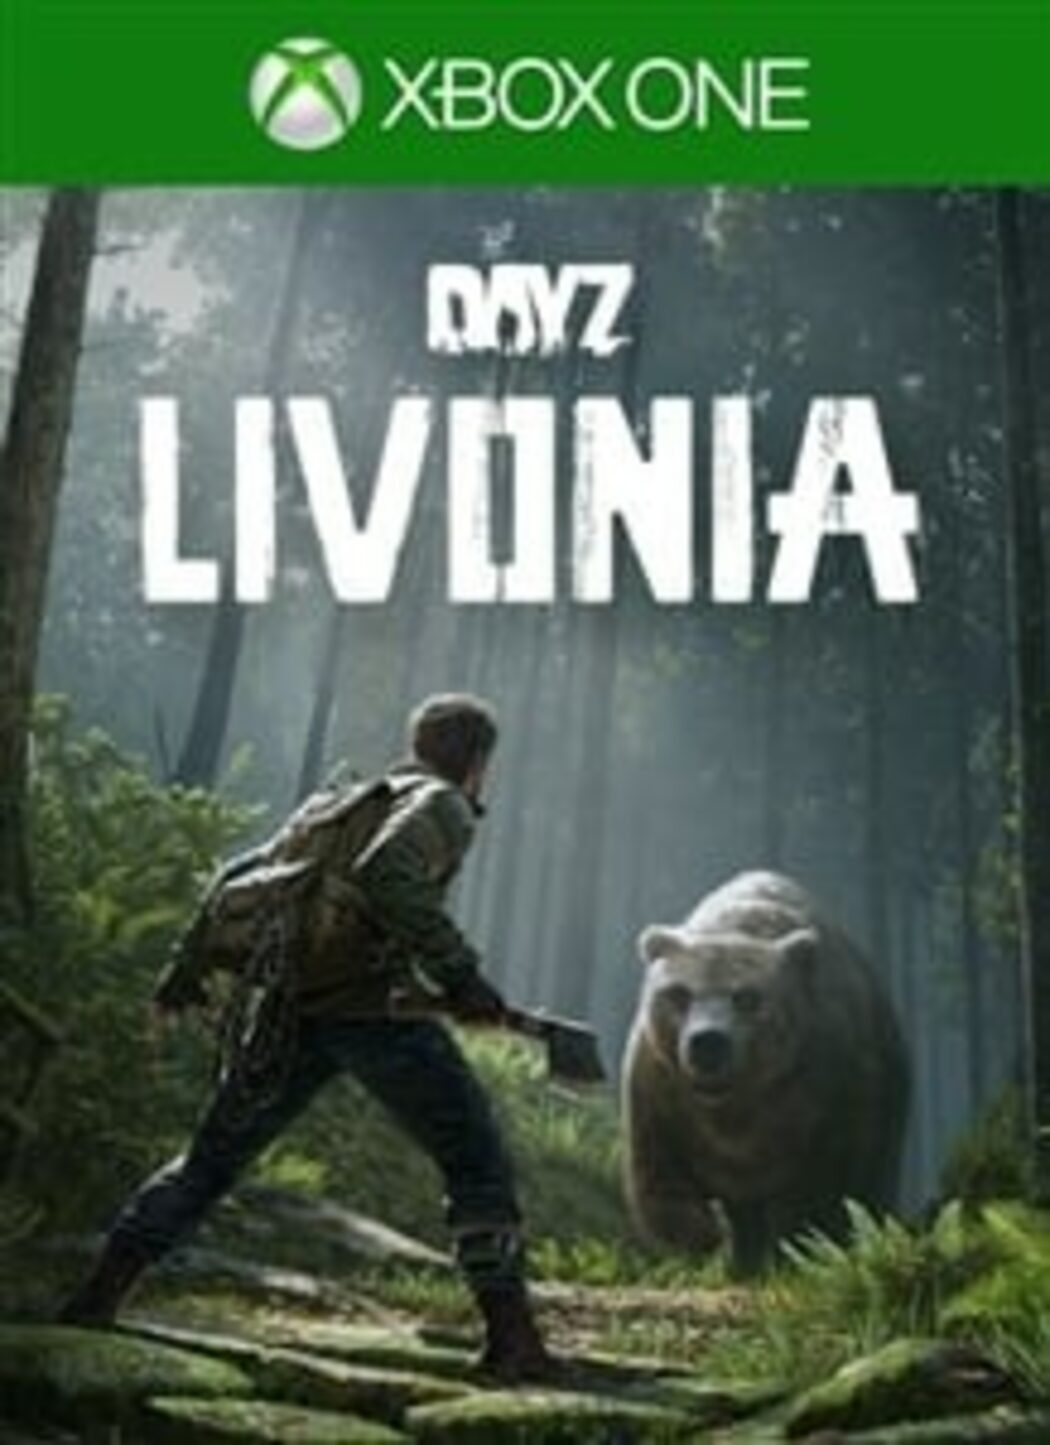 Buy DayZ Livonia - Steam Key - GLOBAL - Cheap - !